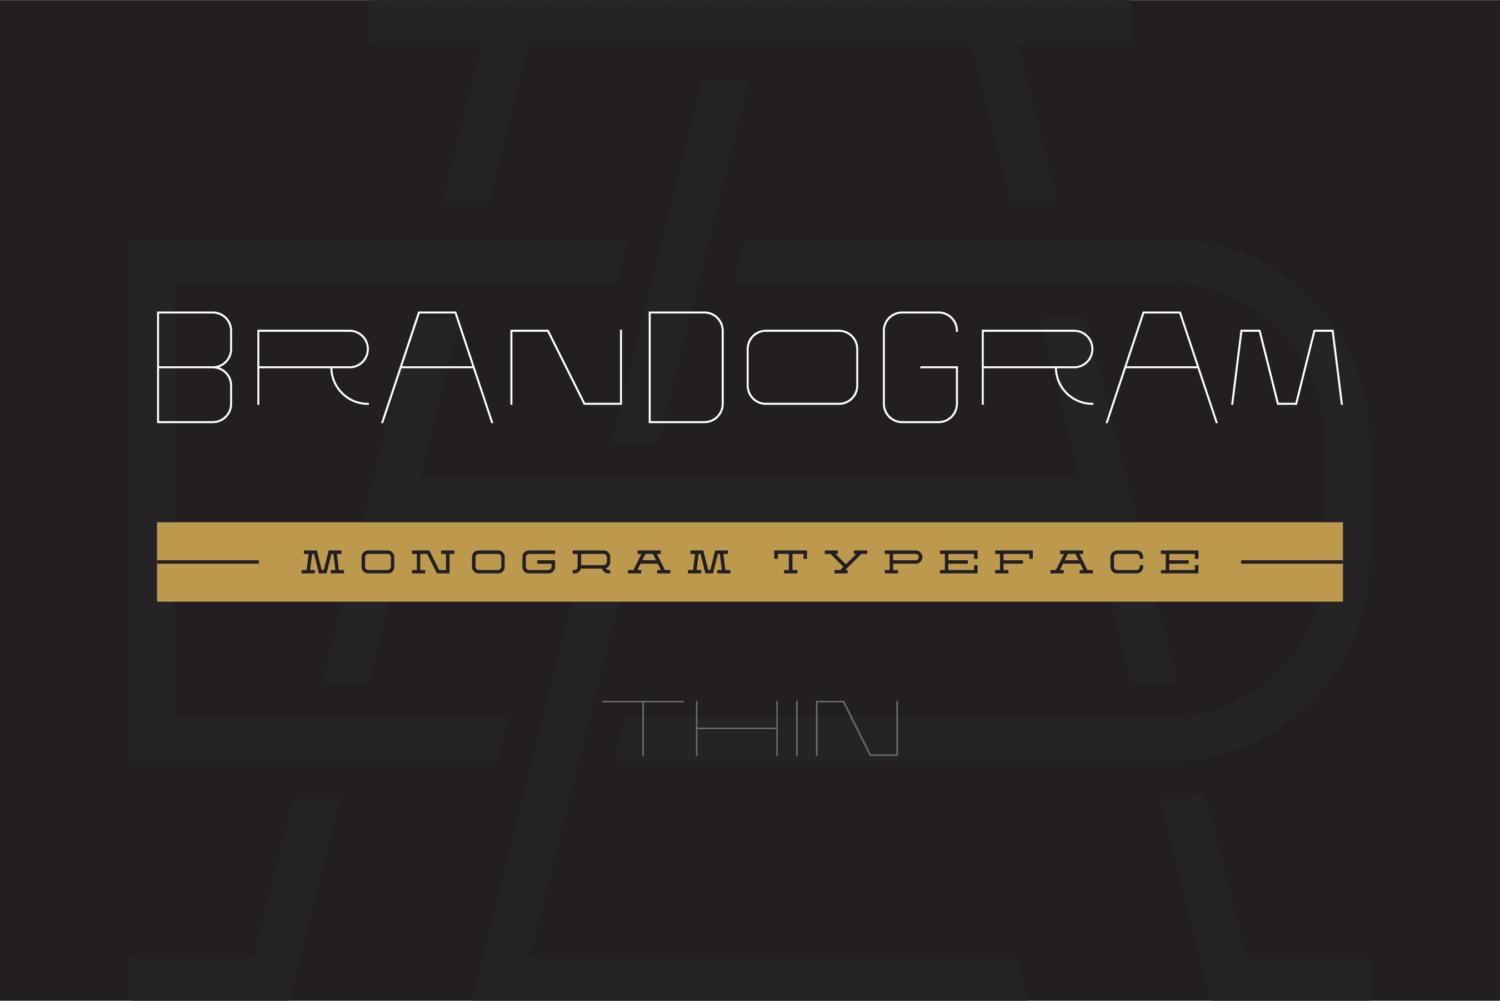 brandogram-monogram-typefacethin-cover-